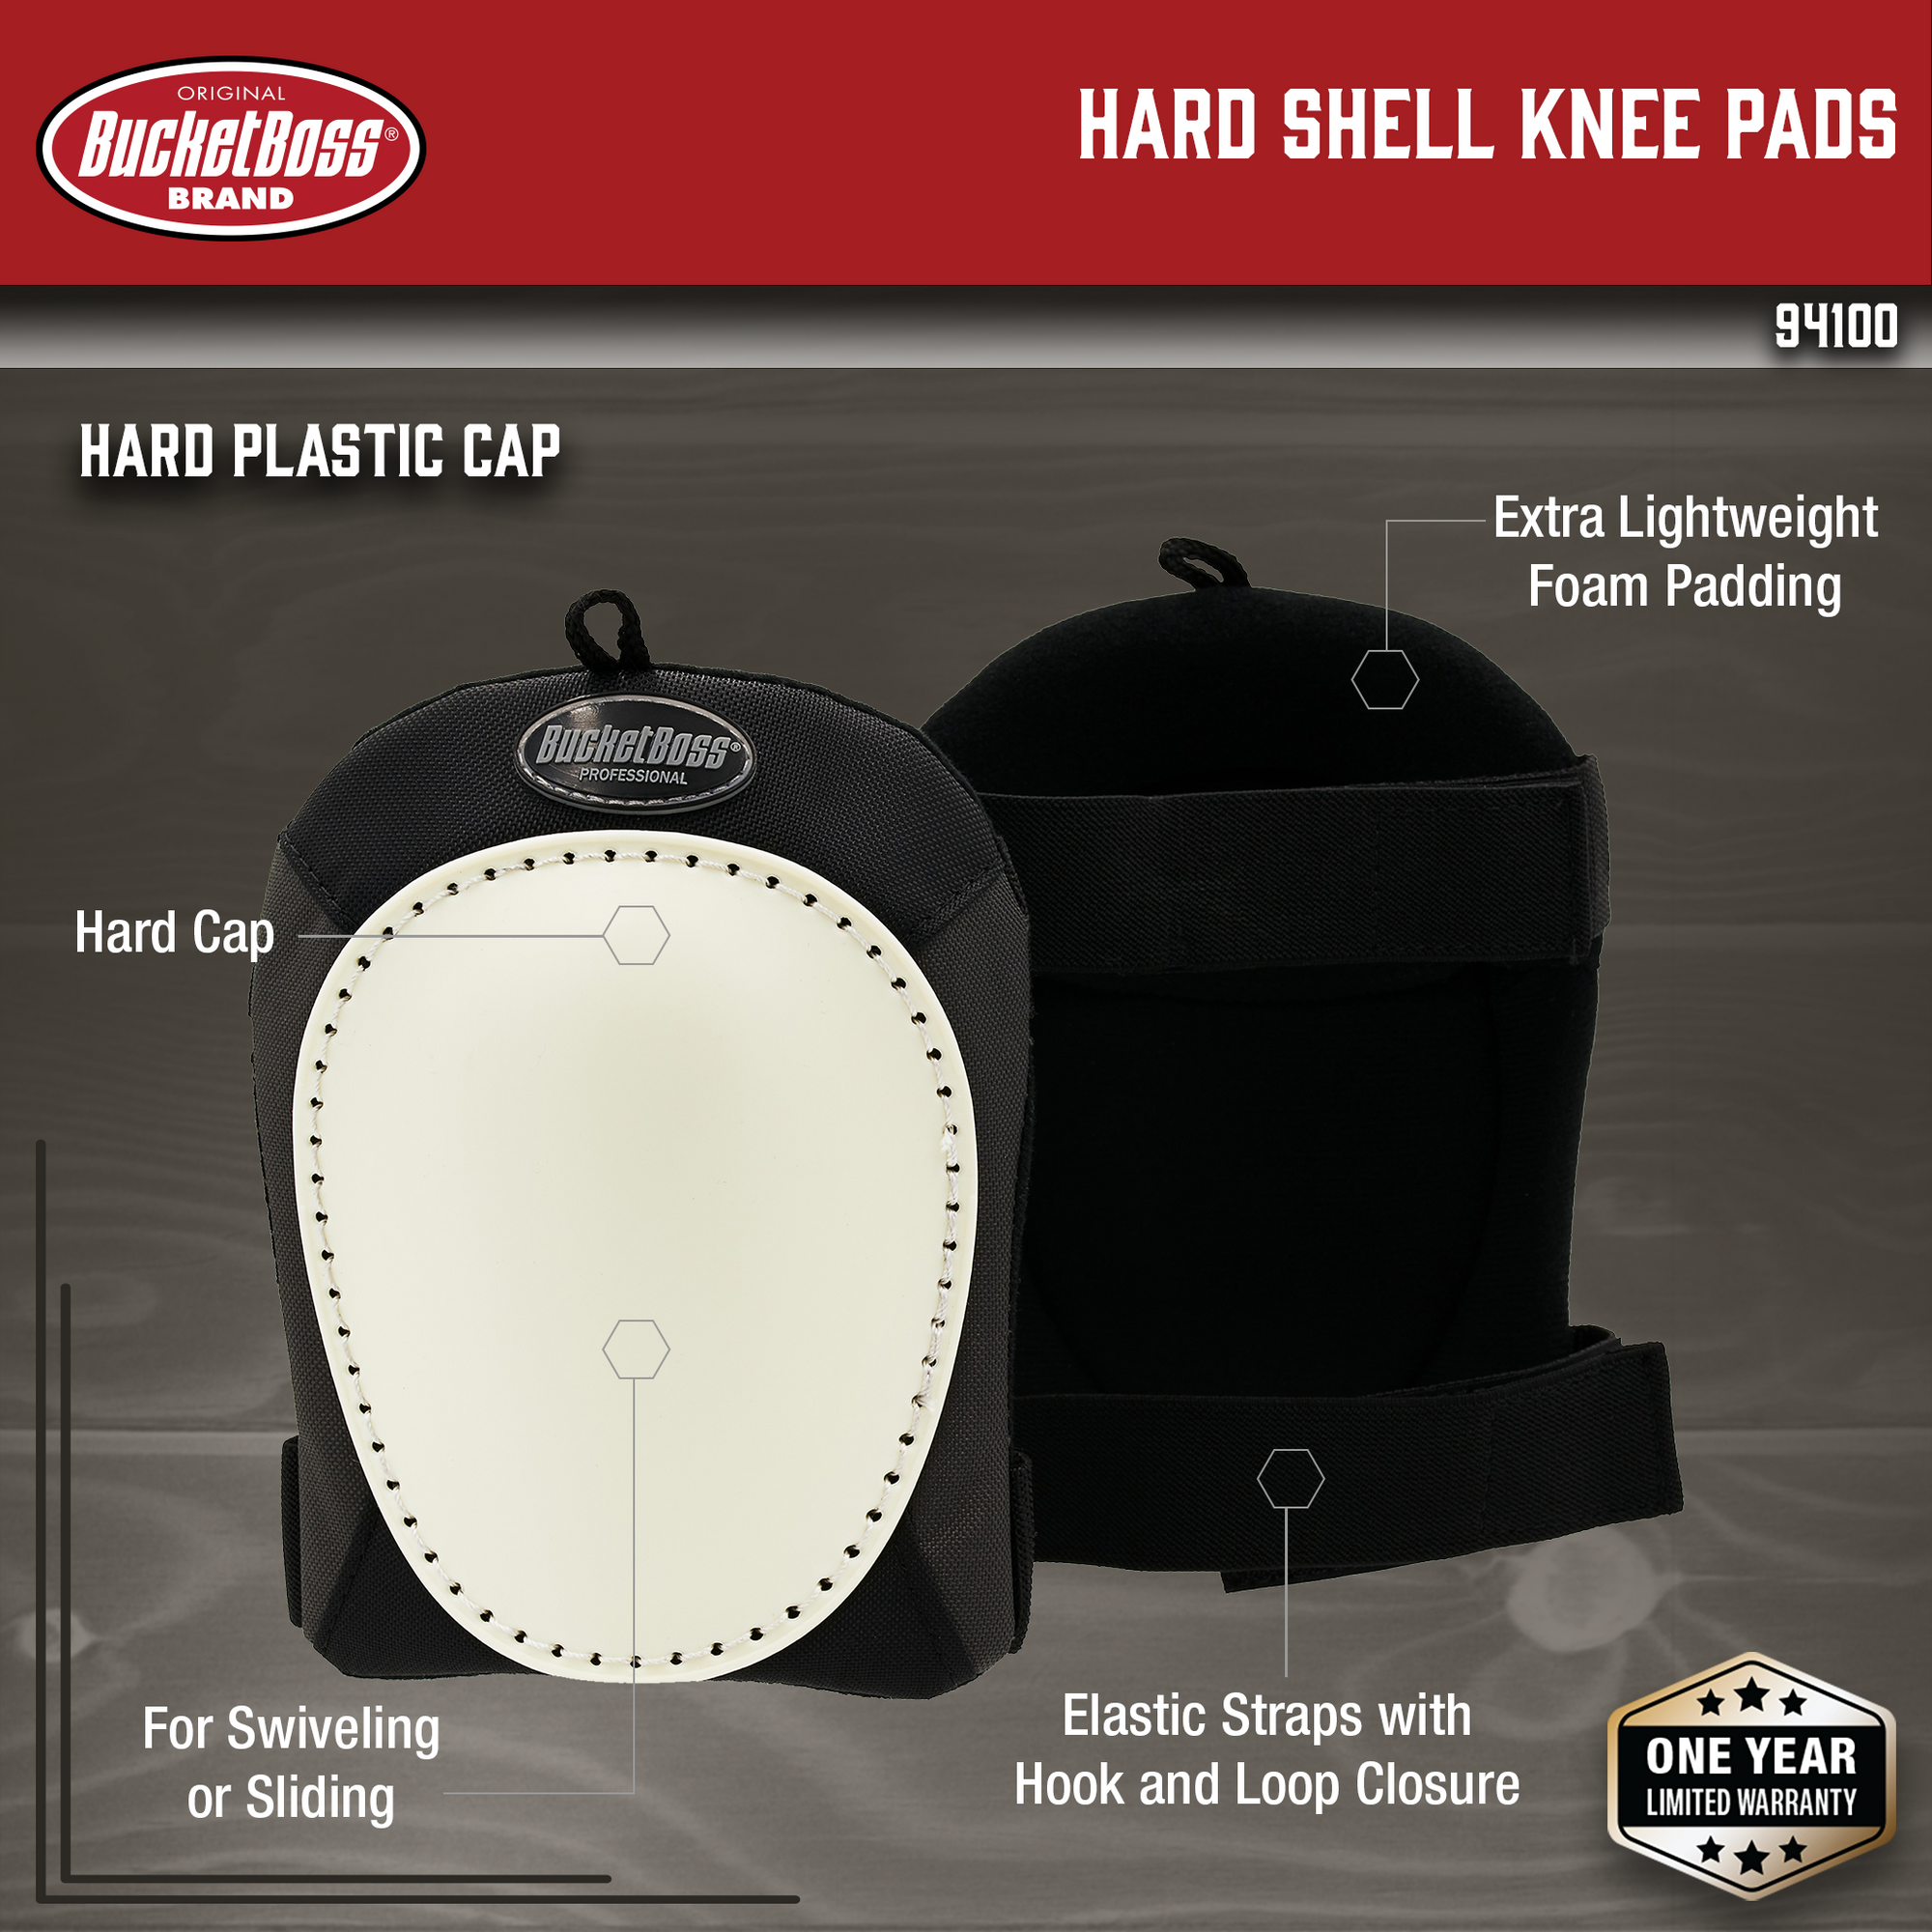 Hard Shell Knee Pads